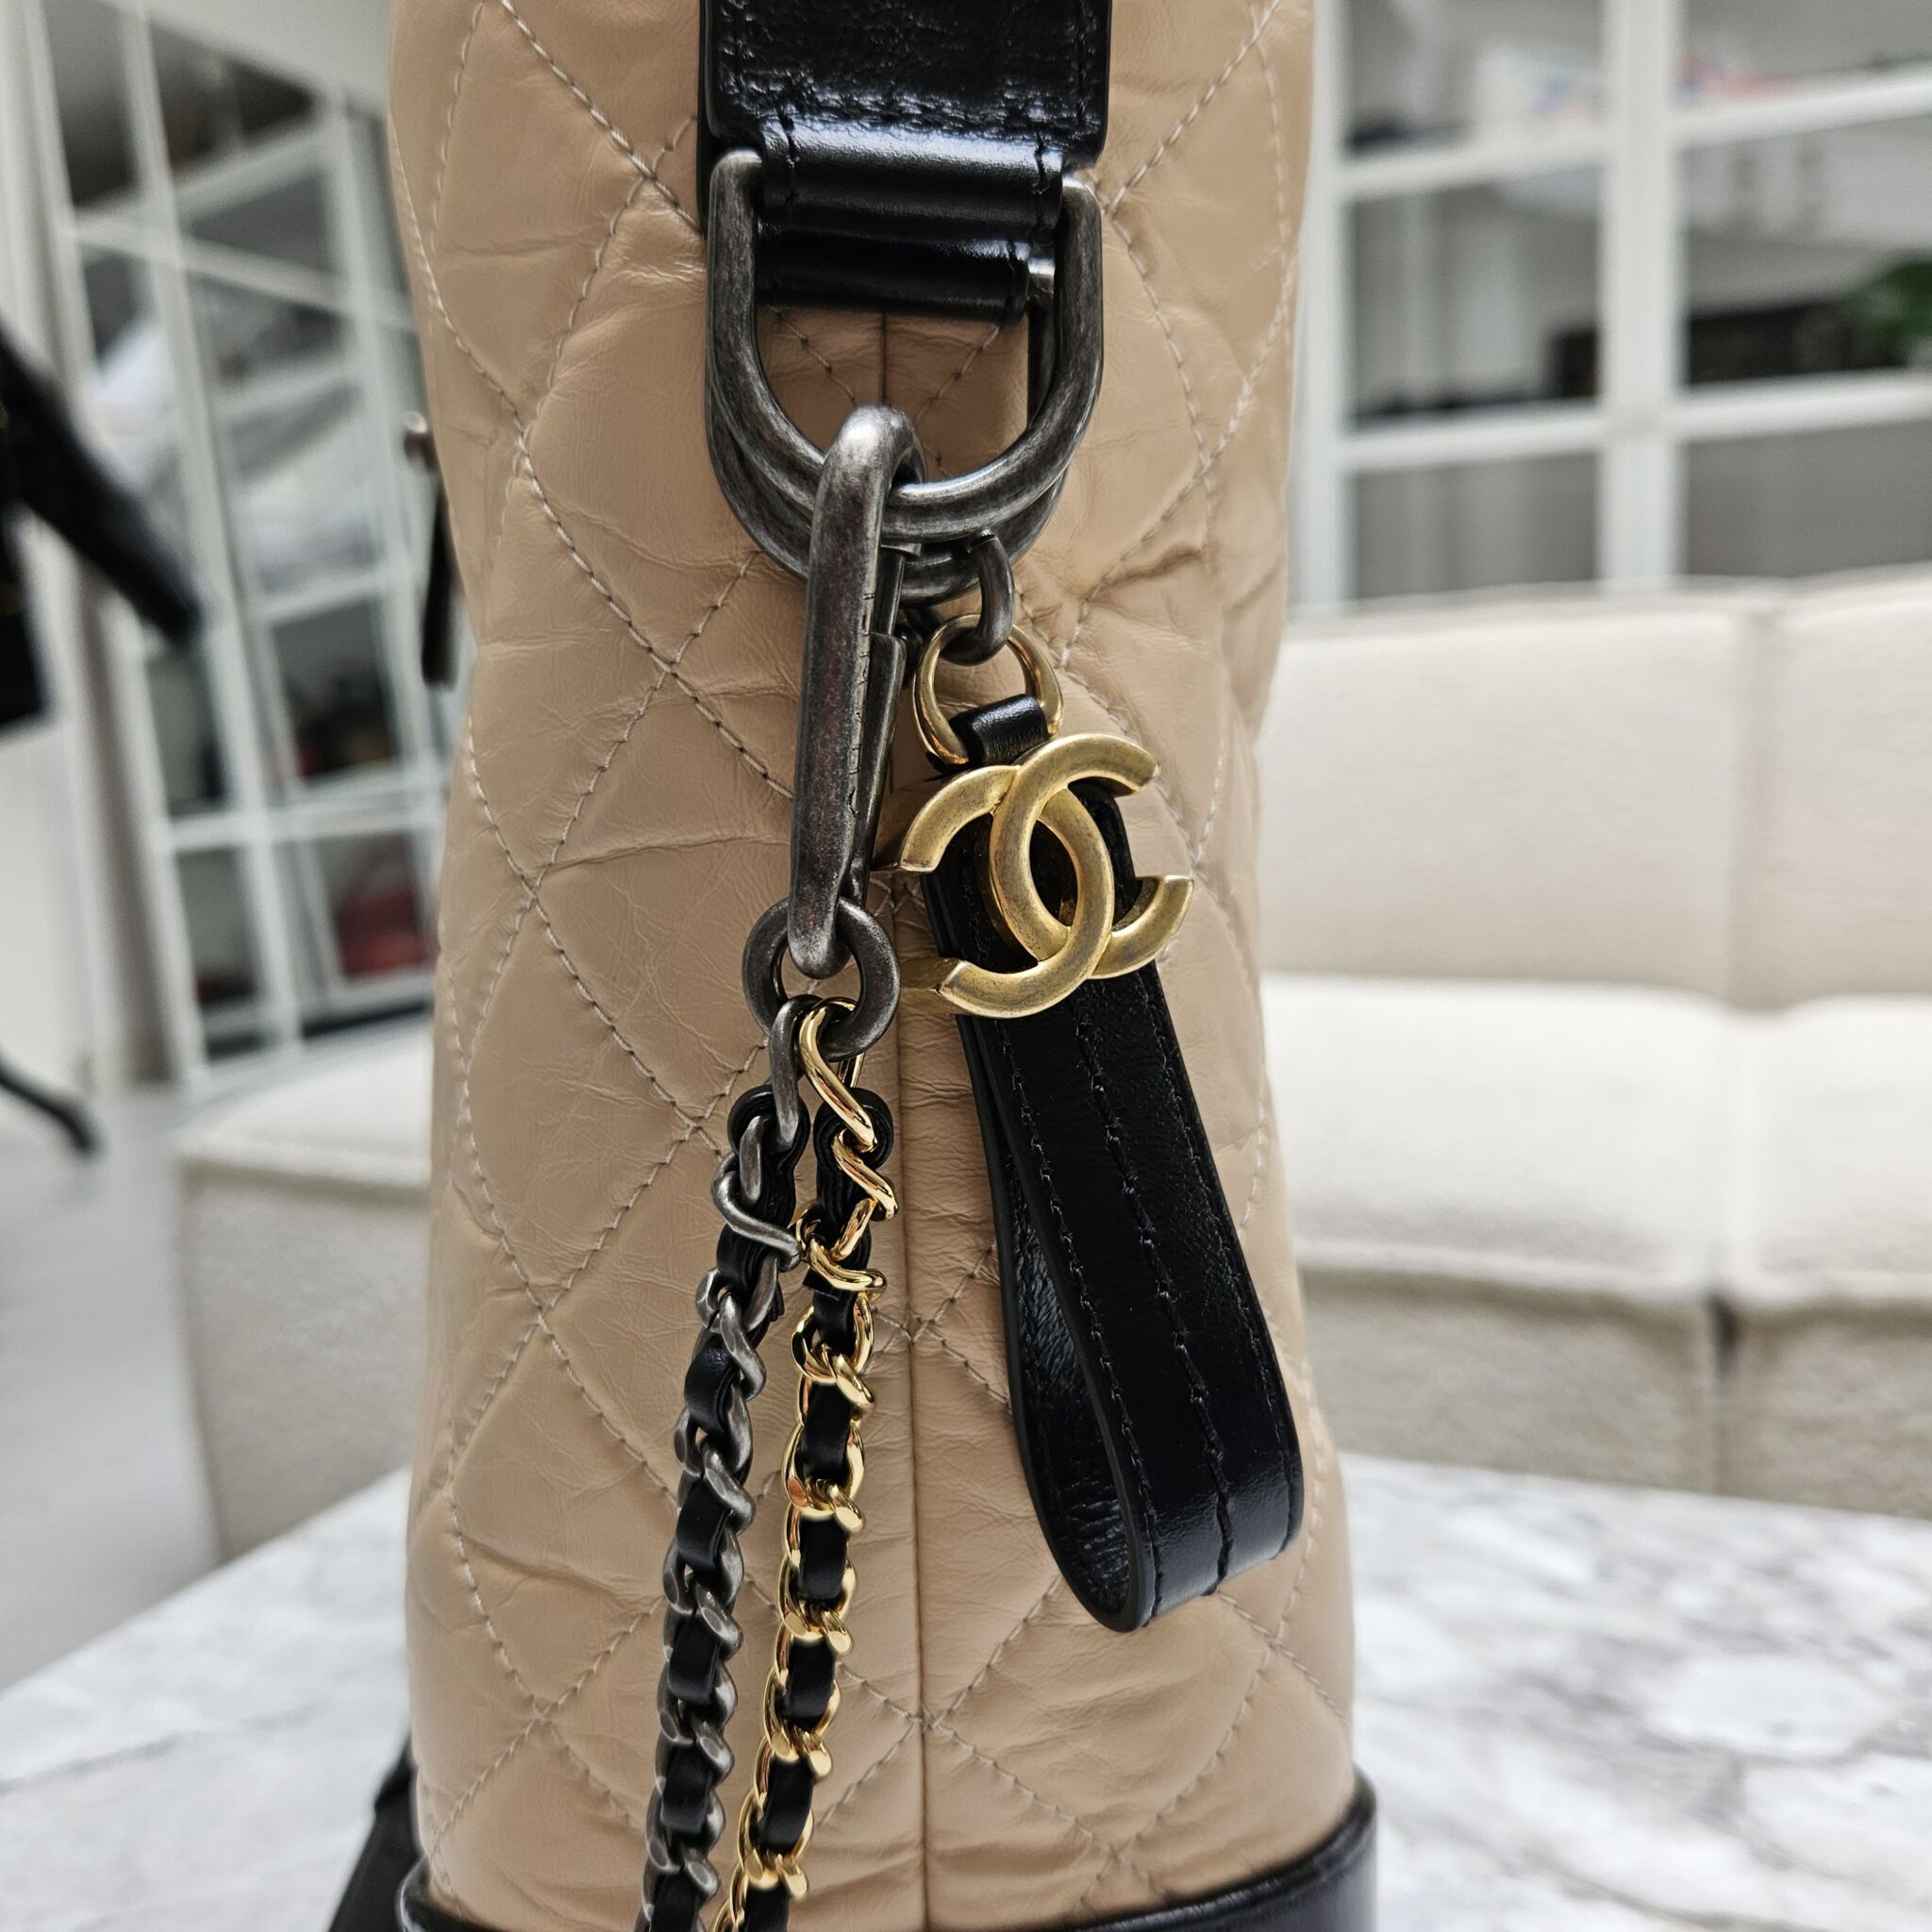 Chanel Large Gabrielle Shopper, Beige/Black - Laulay Luxury